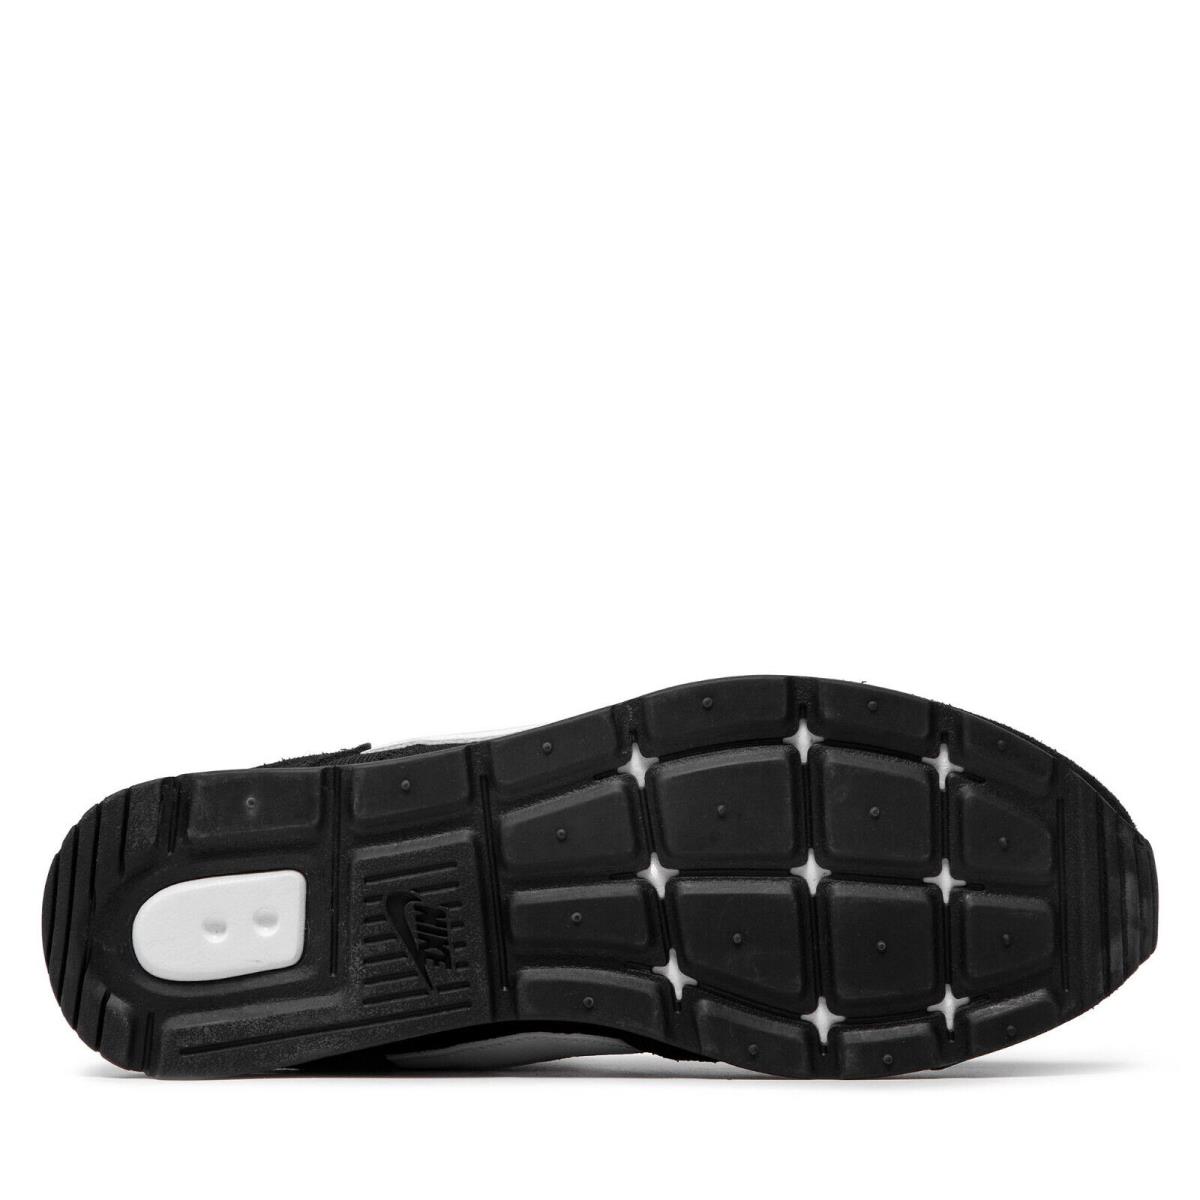 Nike shoes Venture Runner - Black , Midnight Navy/White Manufacturer 10